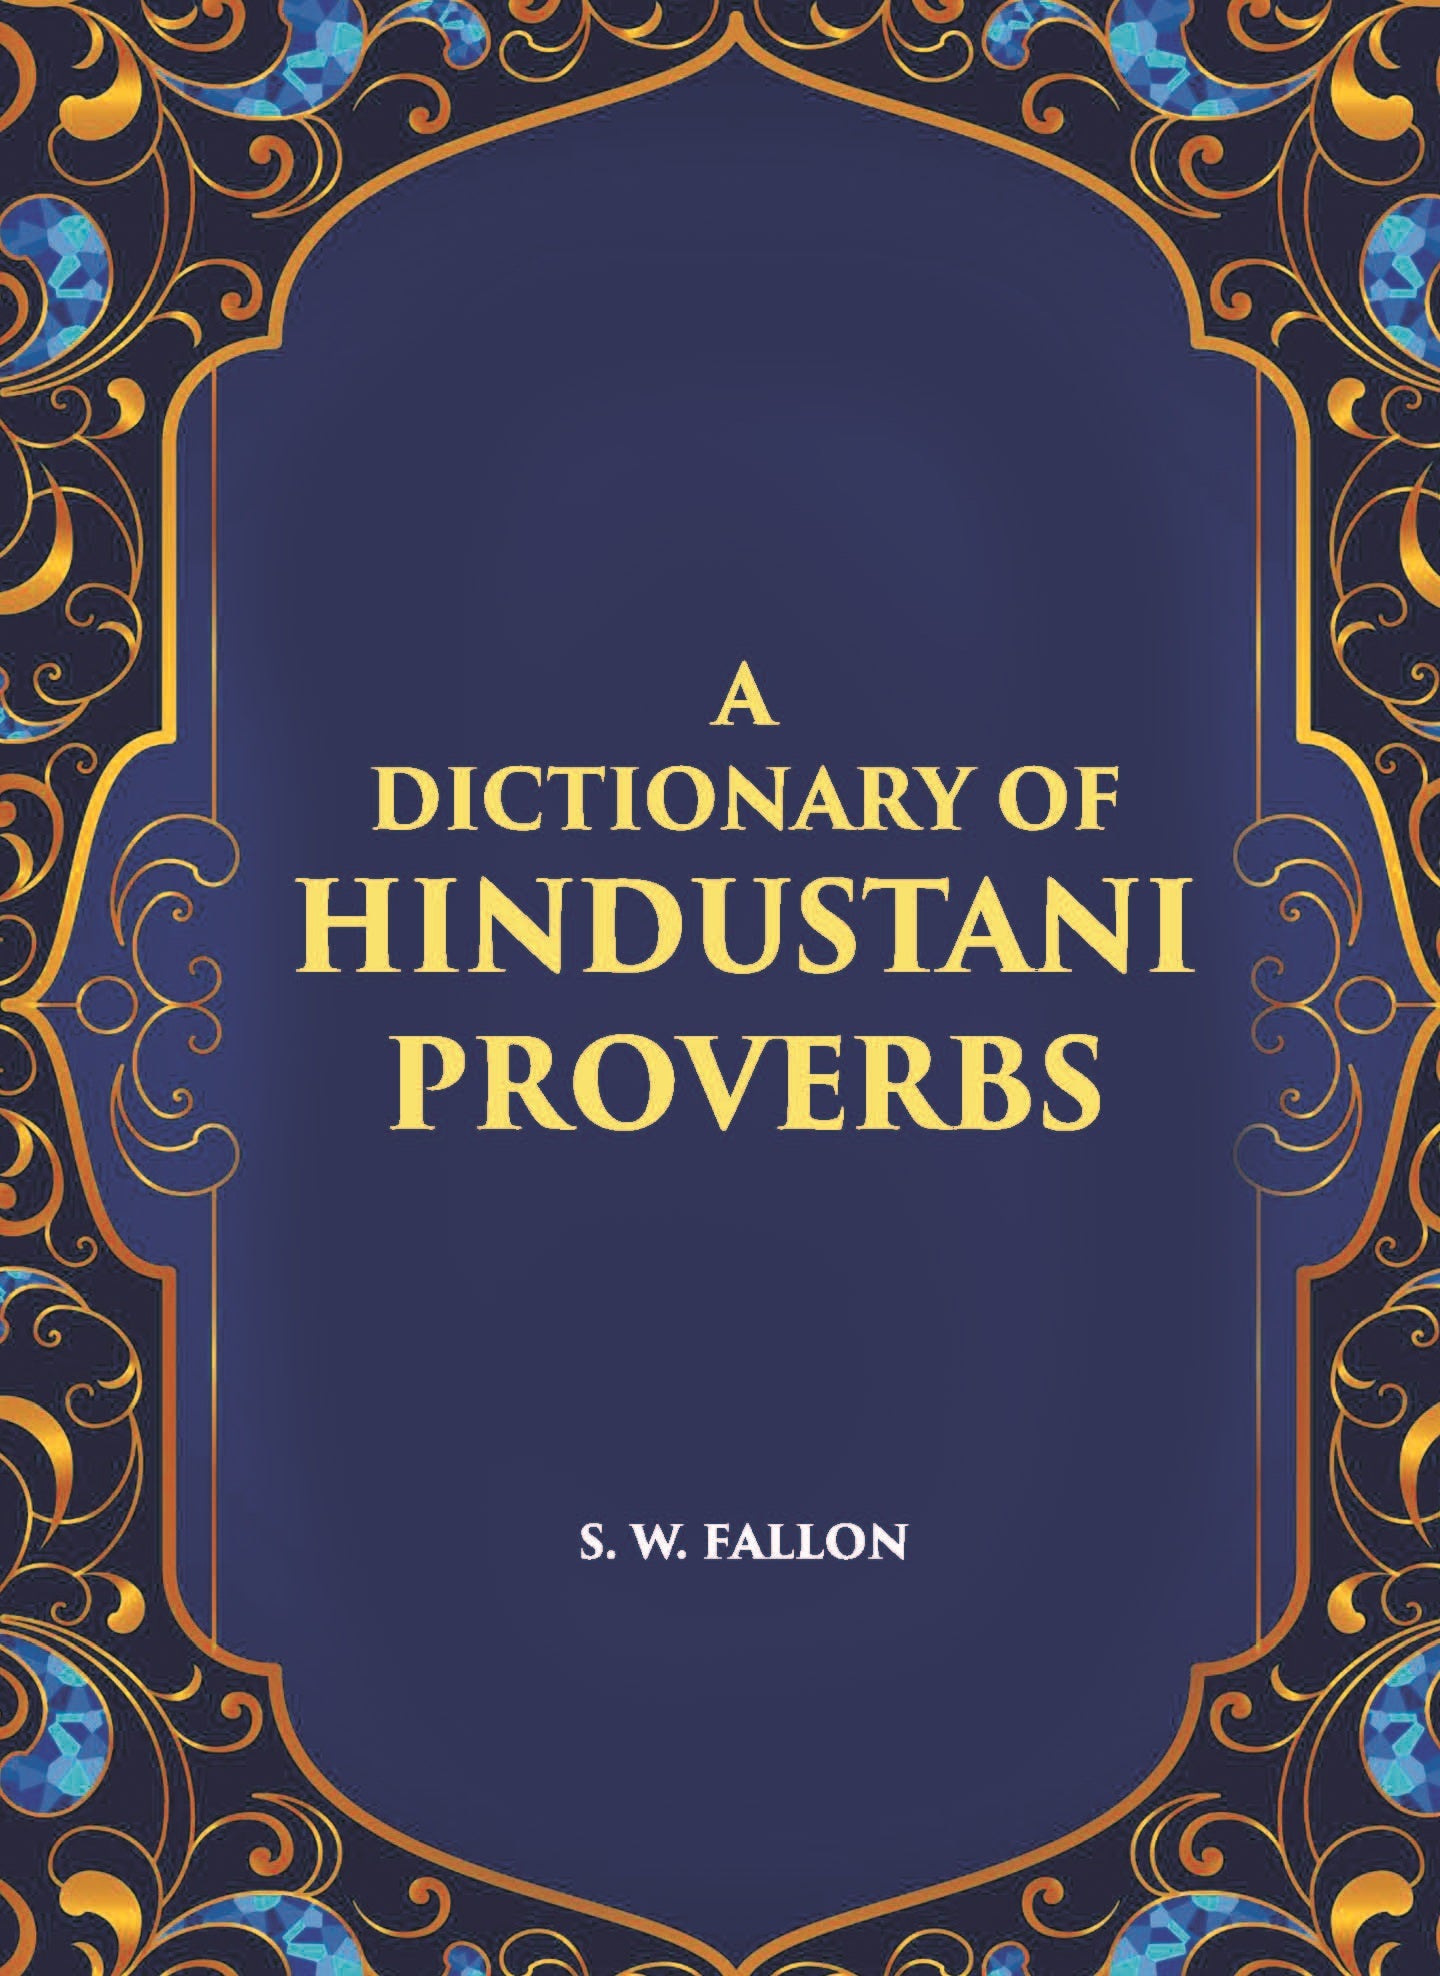 A Dictionary Of Hindustani Proverbs: A Classified Collection Including Many Marwari, Punjabi, Maggah. Bhojpuri And Tirhuti Proverbs, Sayings, Emblems, Aphorisms, Maxims And Similes